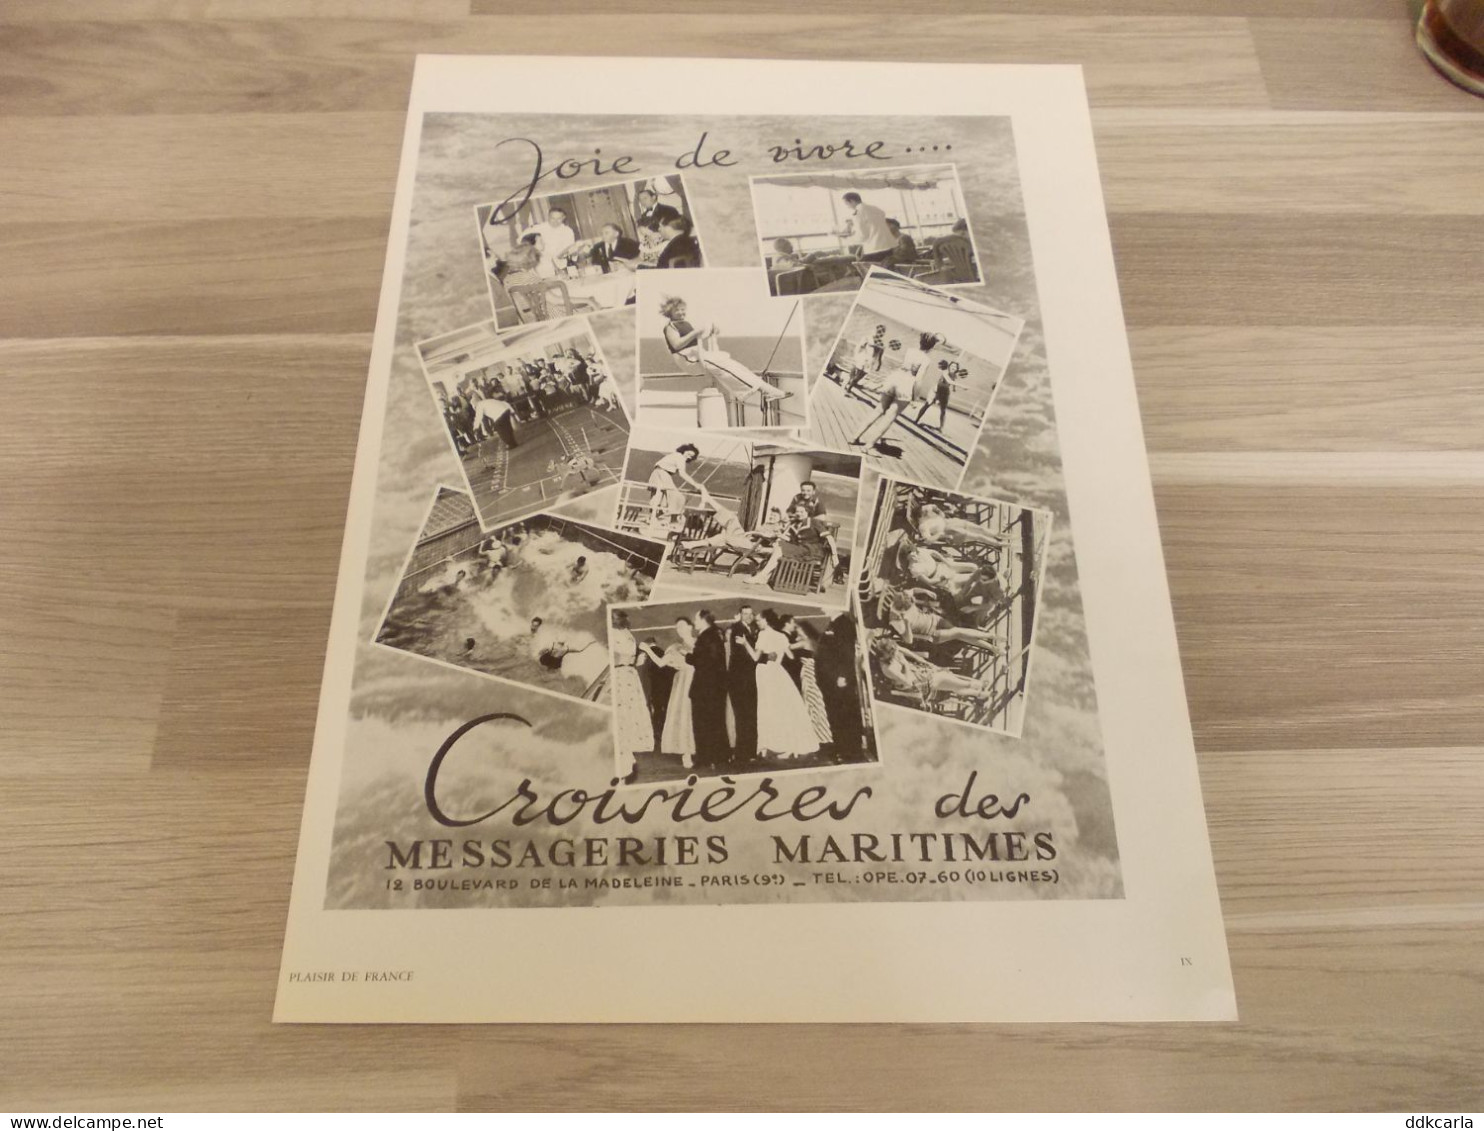 Reclame Advertentie Uit Oud Tijdschrift 1952 - Joie De Vivre Croisières Des Messageries Maritimes - Werbung